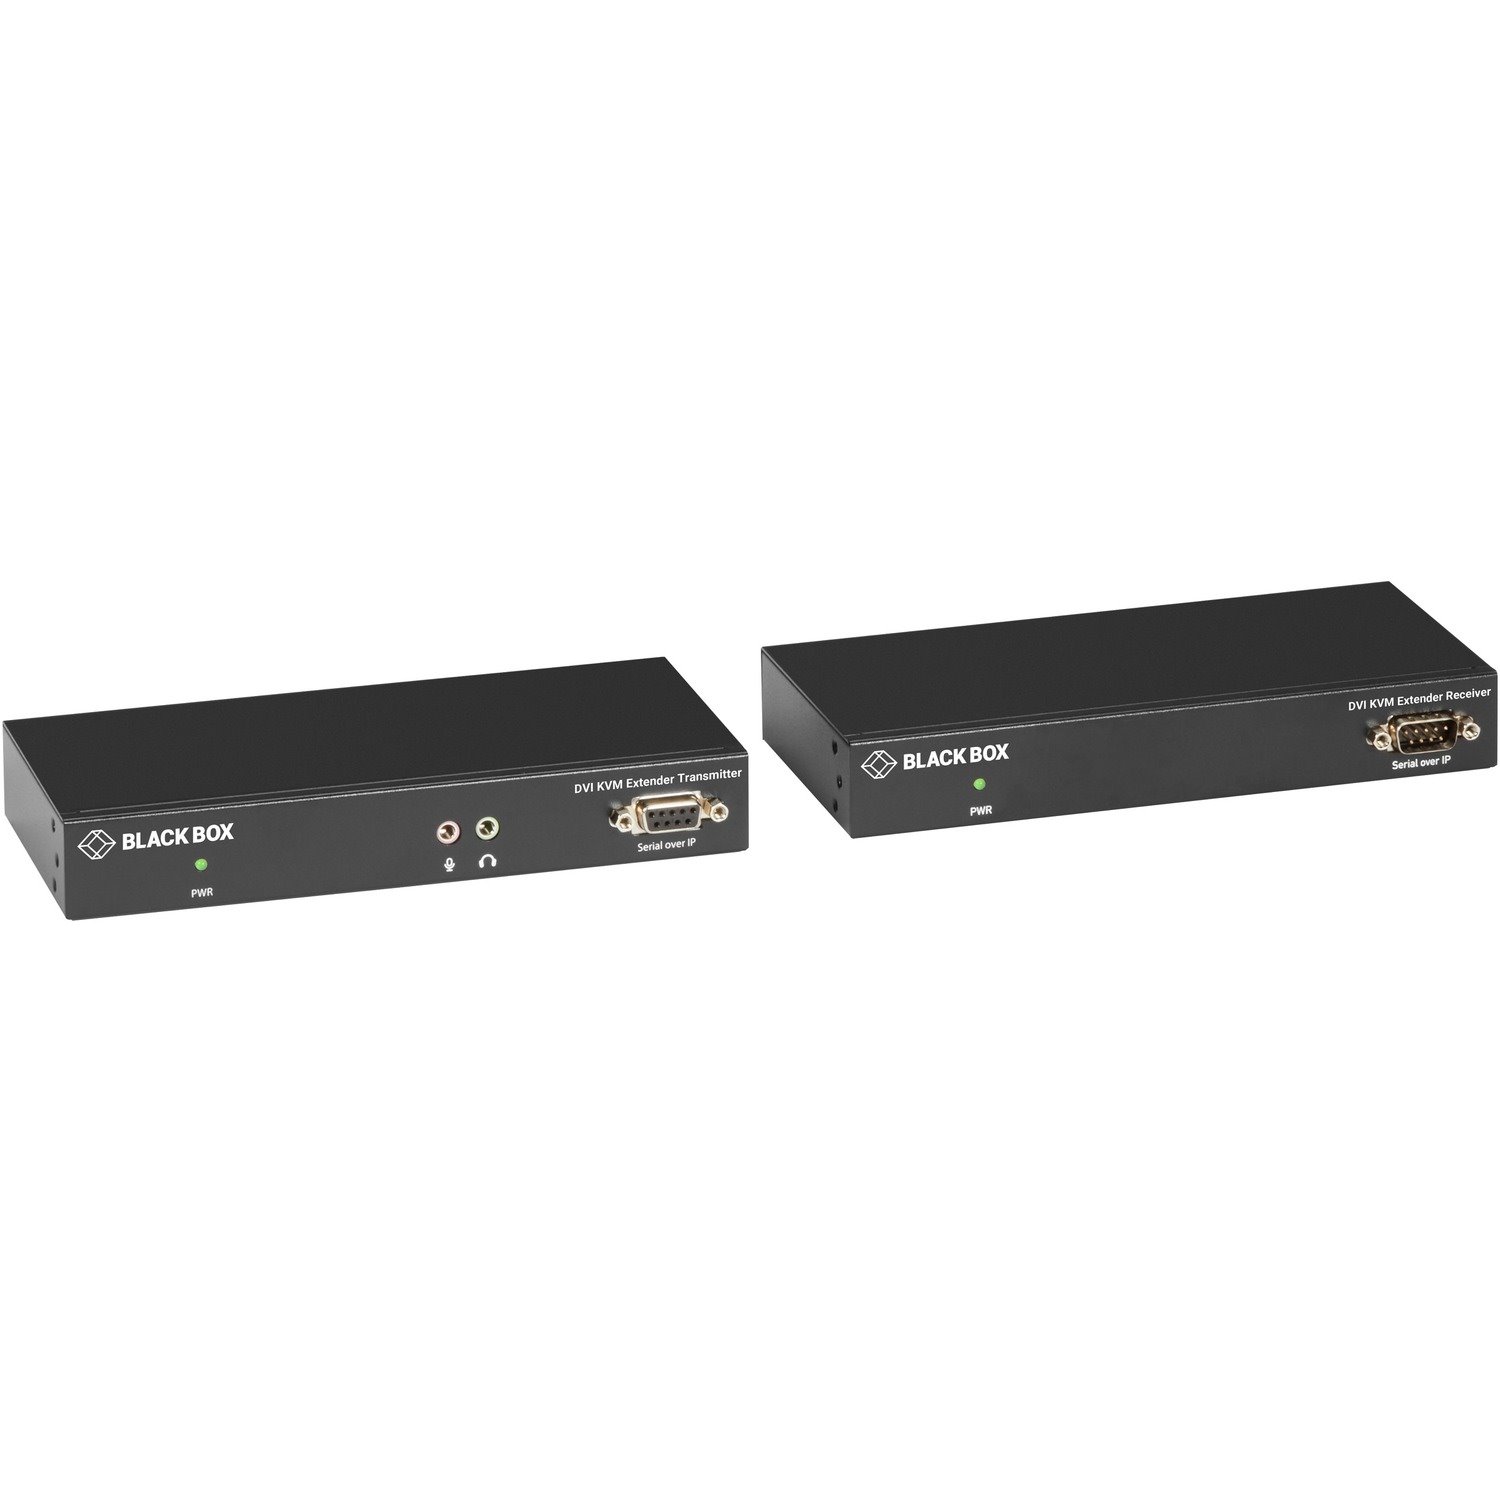 Black Box LC100 Series KVM Extender - DVI, Transmitter and Receiver, CATx